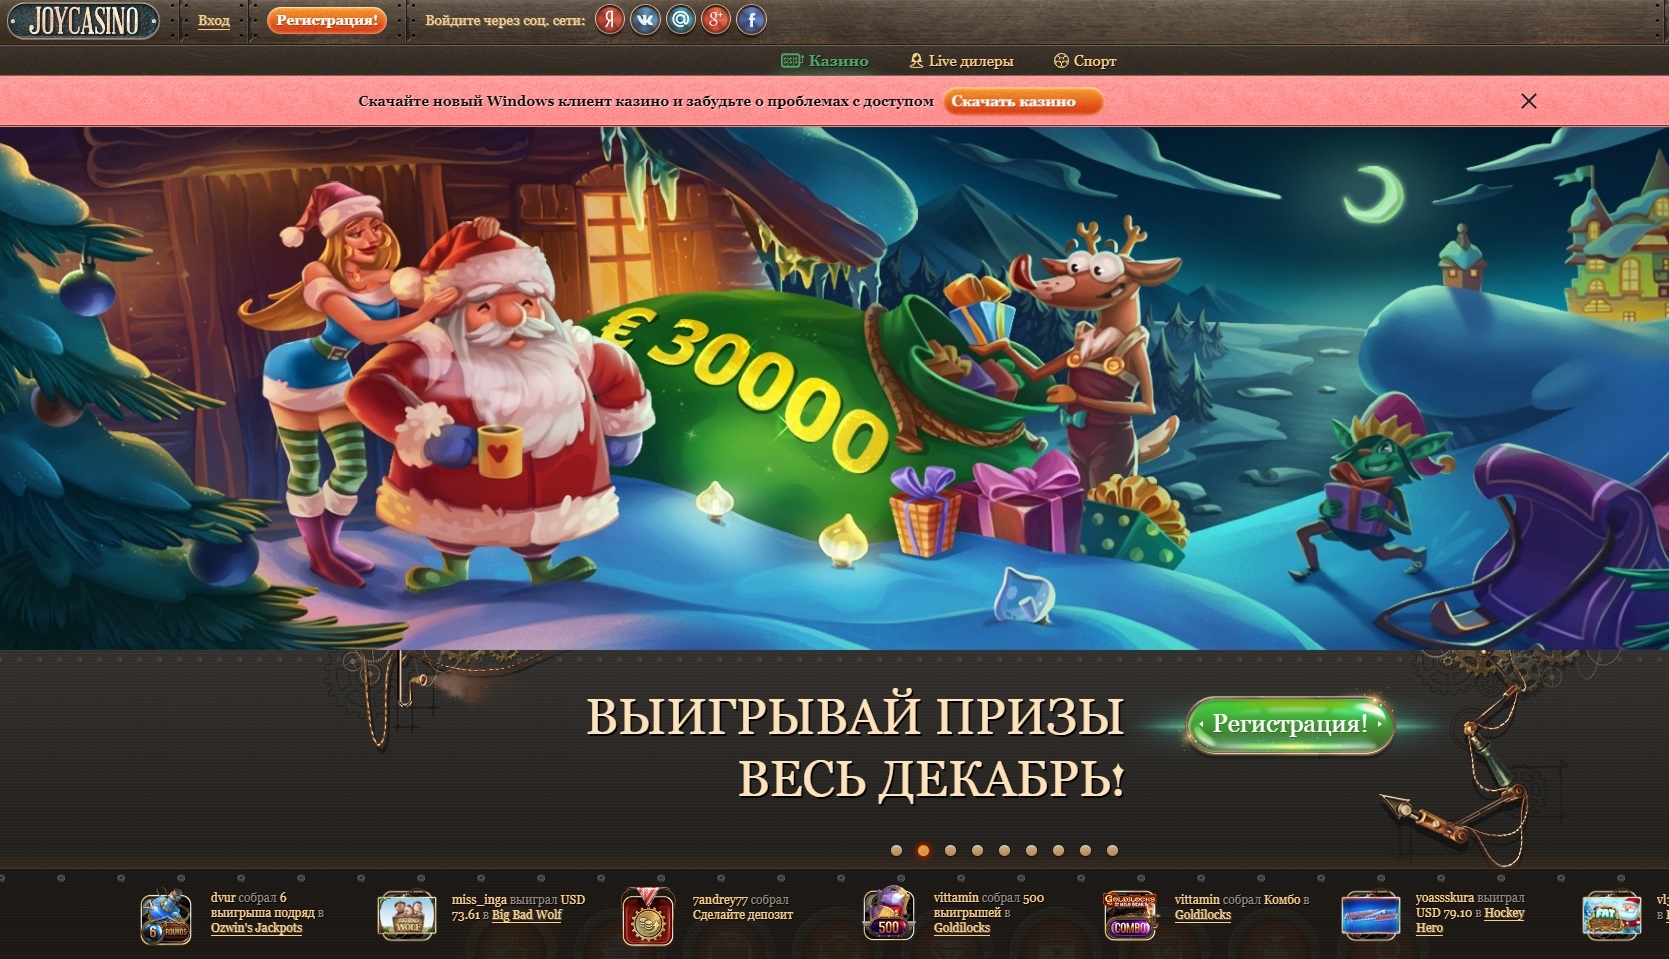 Joycasino com ru games new текст джекпот апнул хостел